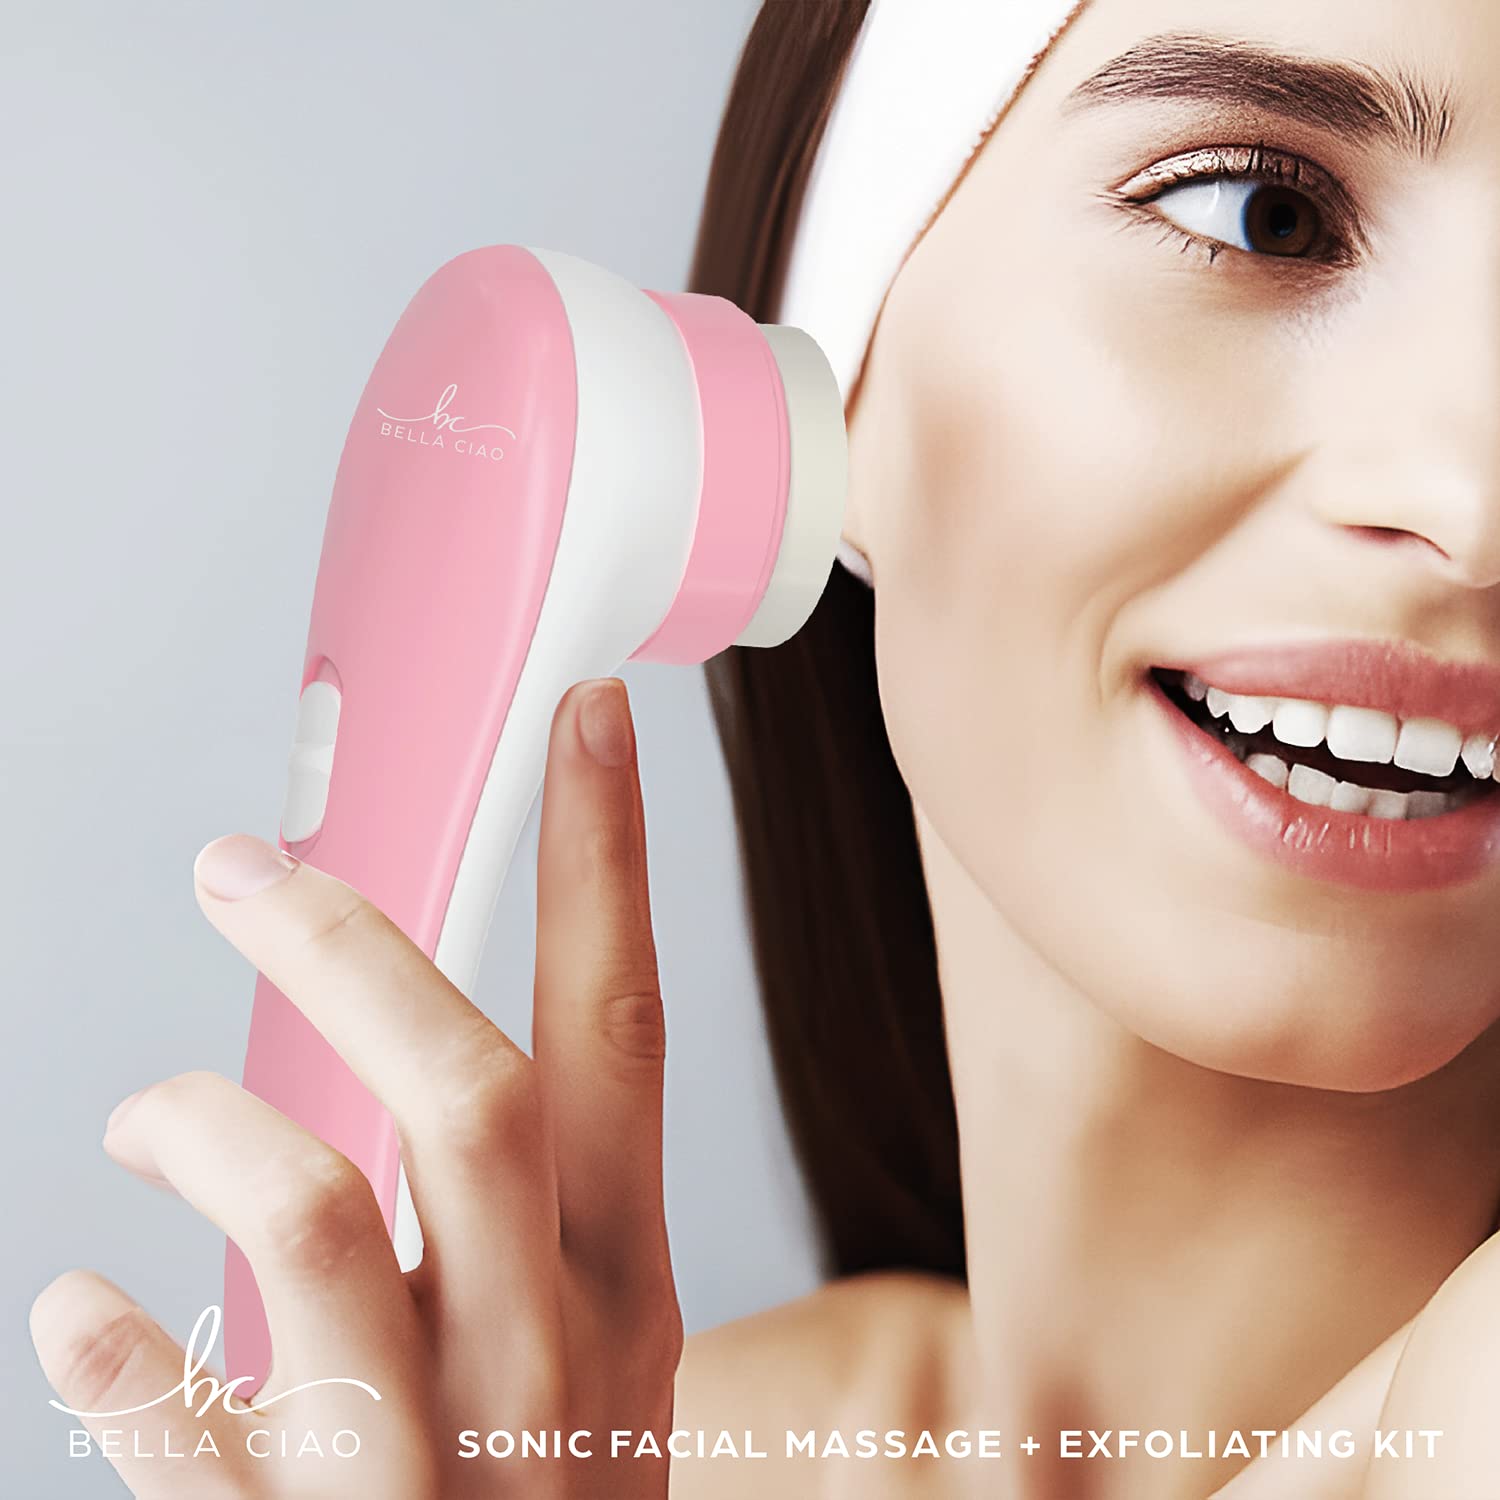 Bella Ciao 6-Piece Cordless Facial Massage Exfoliating Set for Women (Pink)